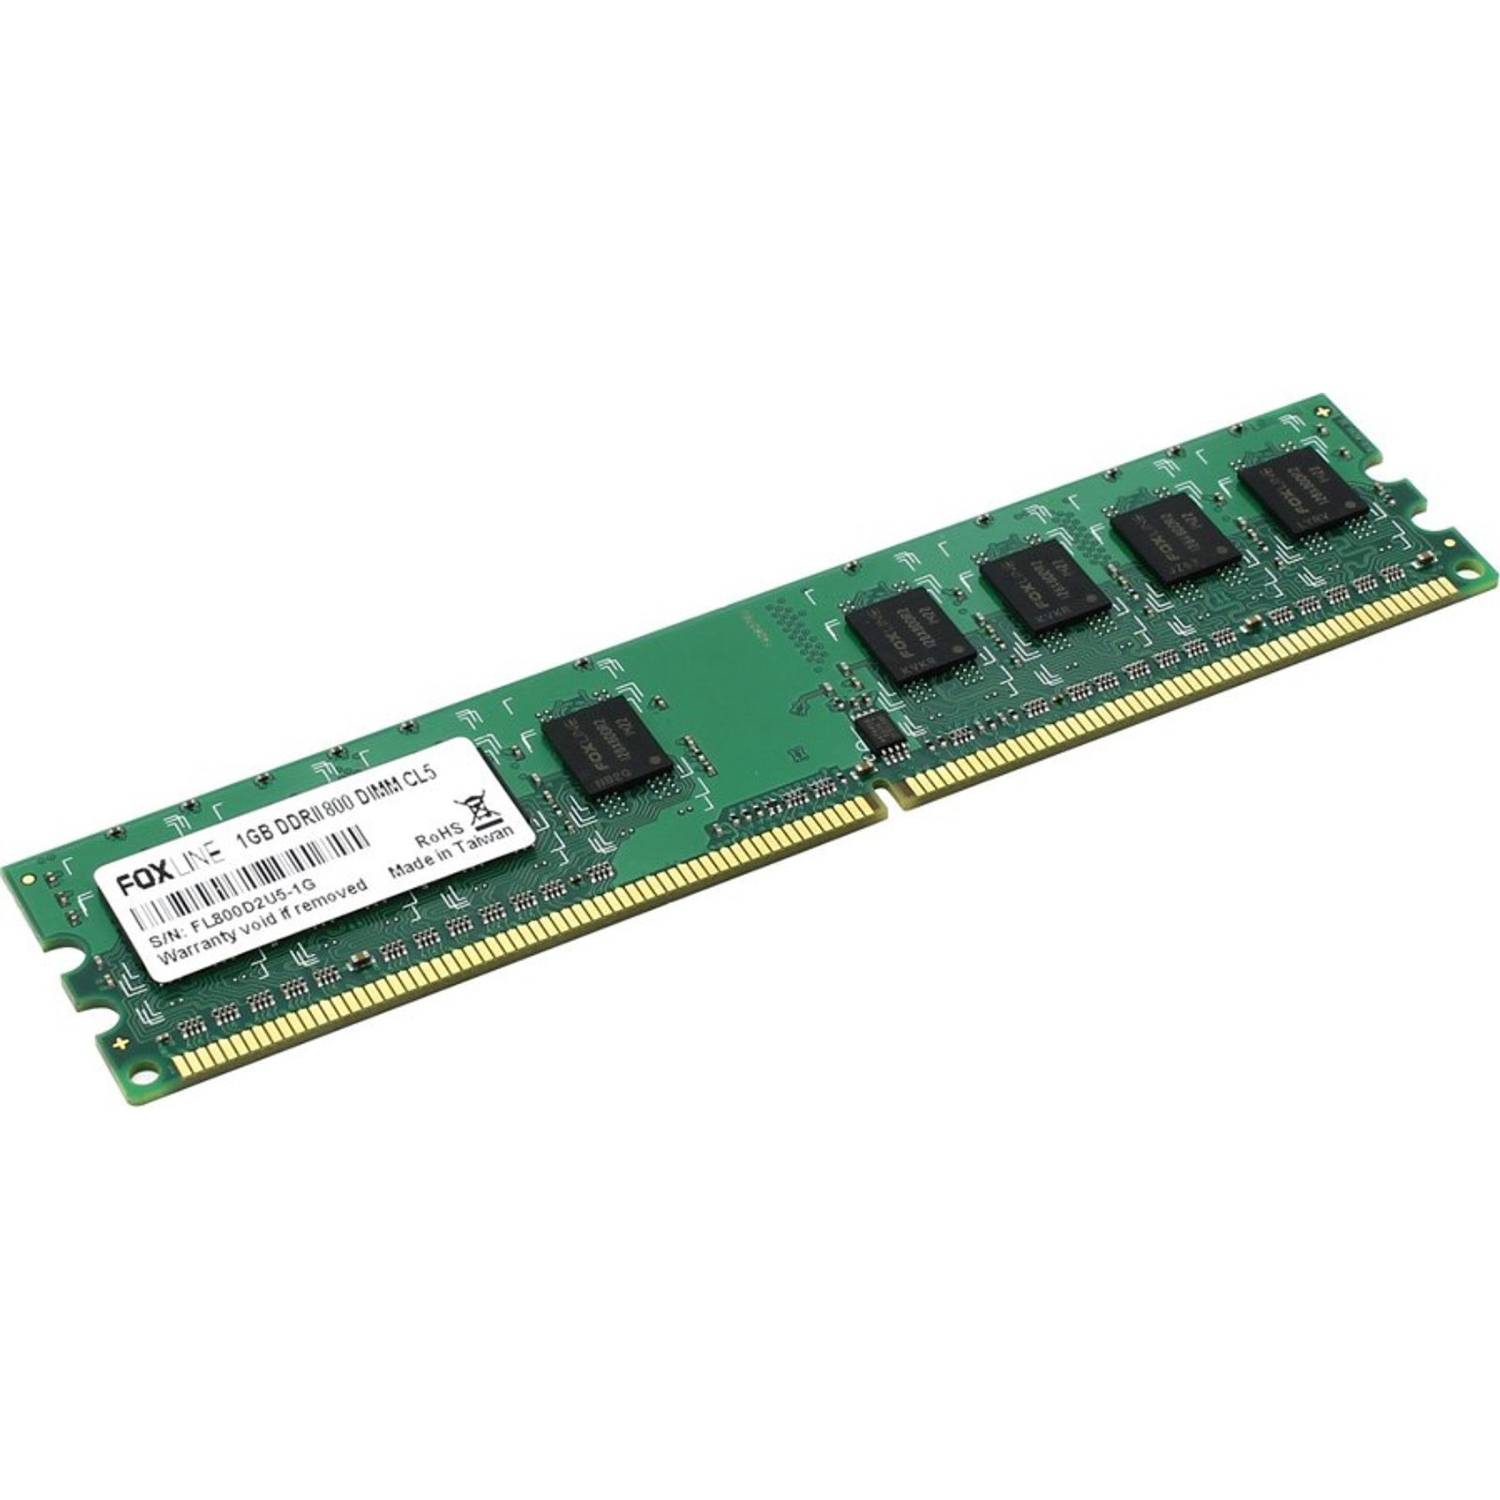 Оперативная память Foxline 1GB DDR2 DIMM (FL800D2U5-1G) оперативная память kingston kvr667d2d8f5 1g ddr2 1gb 5300 для серверов оем